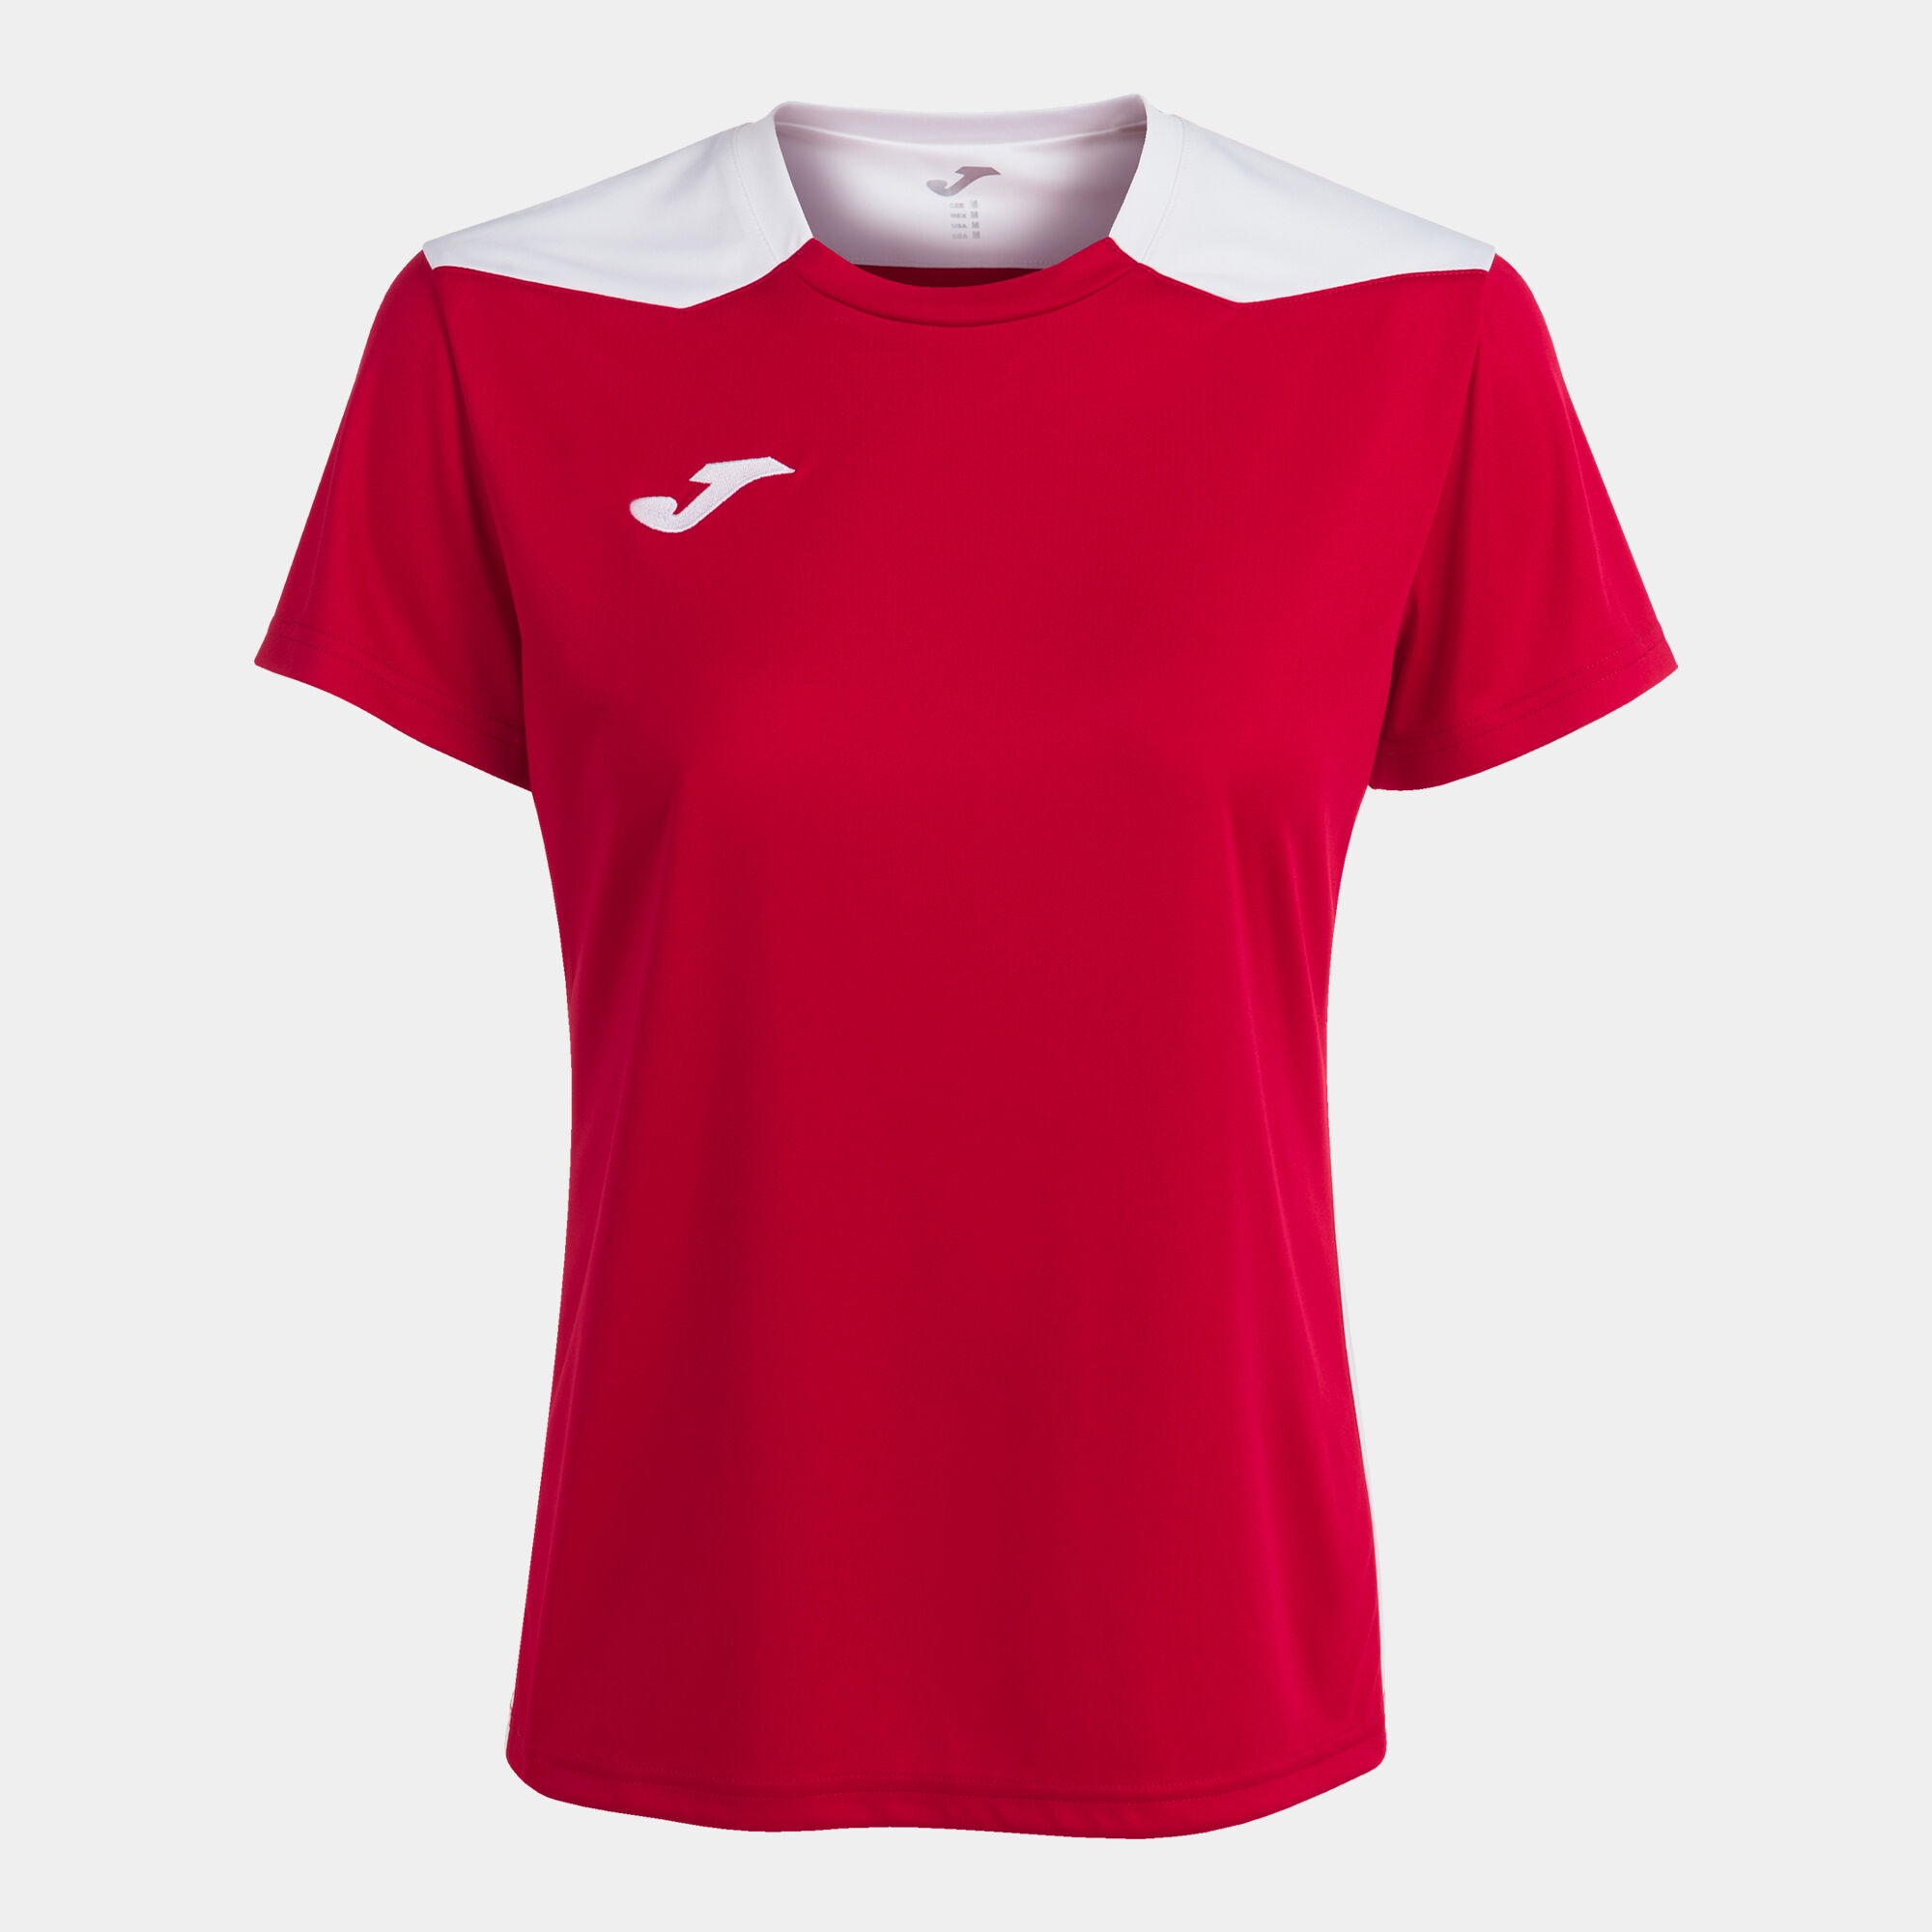 Shirt short sleeve woman Championship VI red white